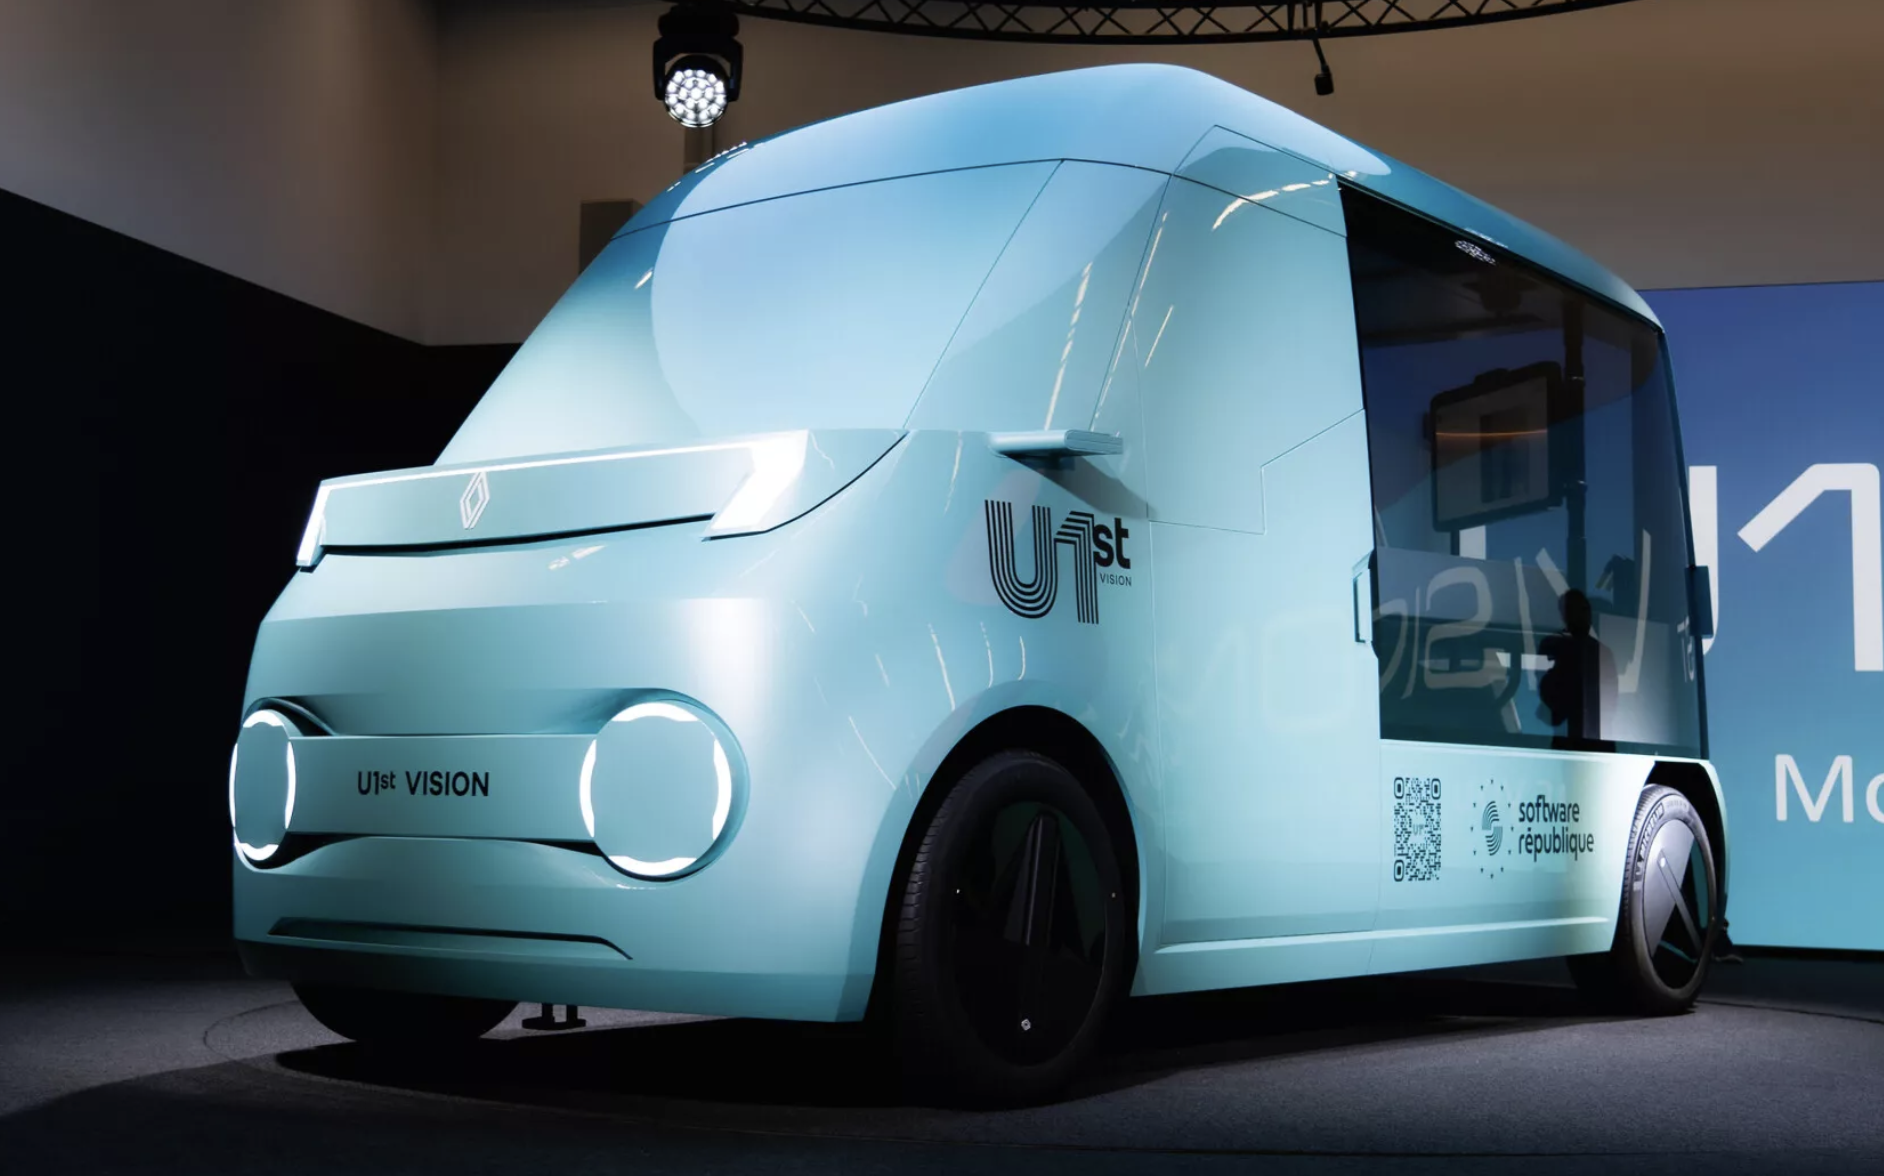 Renault unveils U1st Vision: A cutting-edge mobile hospital